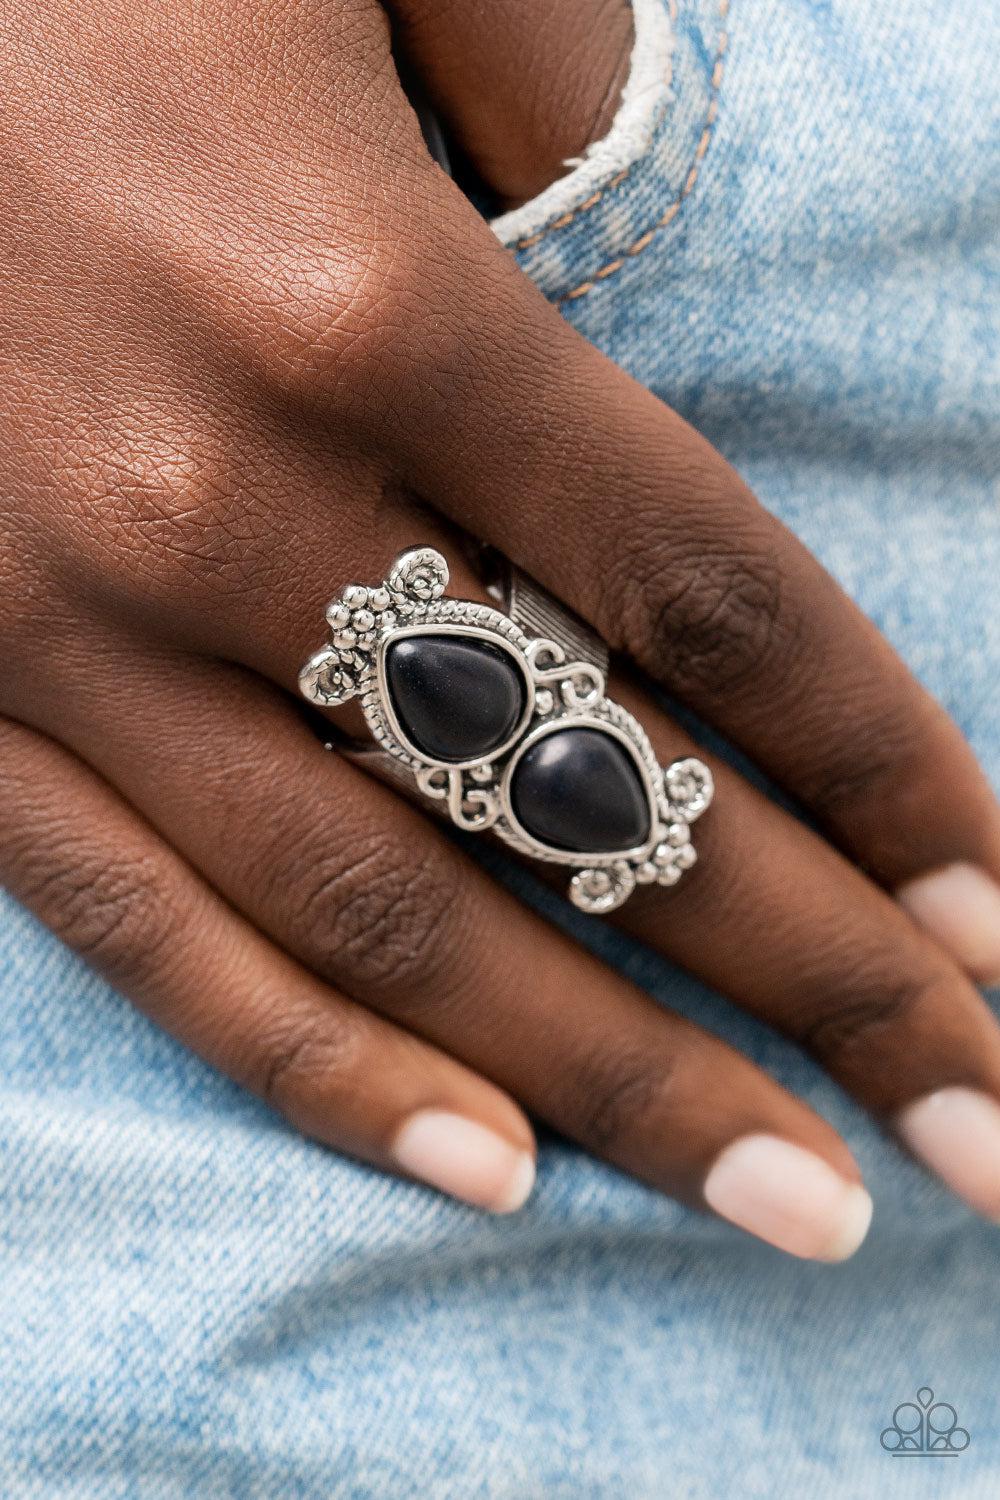 Adobe Garden Black Stone Ring - Paparazzi Accessories- lightbox - CarasShop.com - $5 Jewelry by Cara Jewels